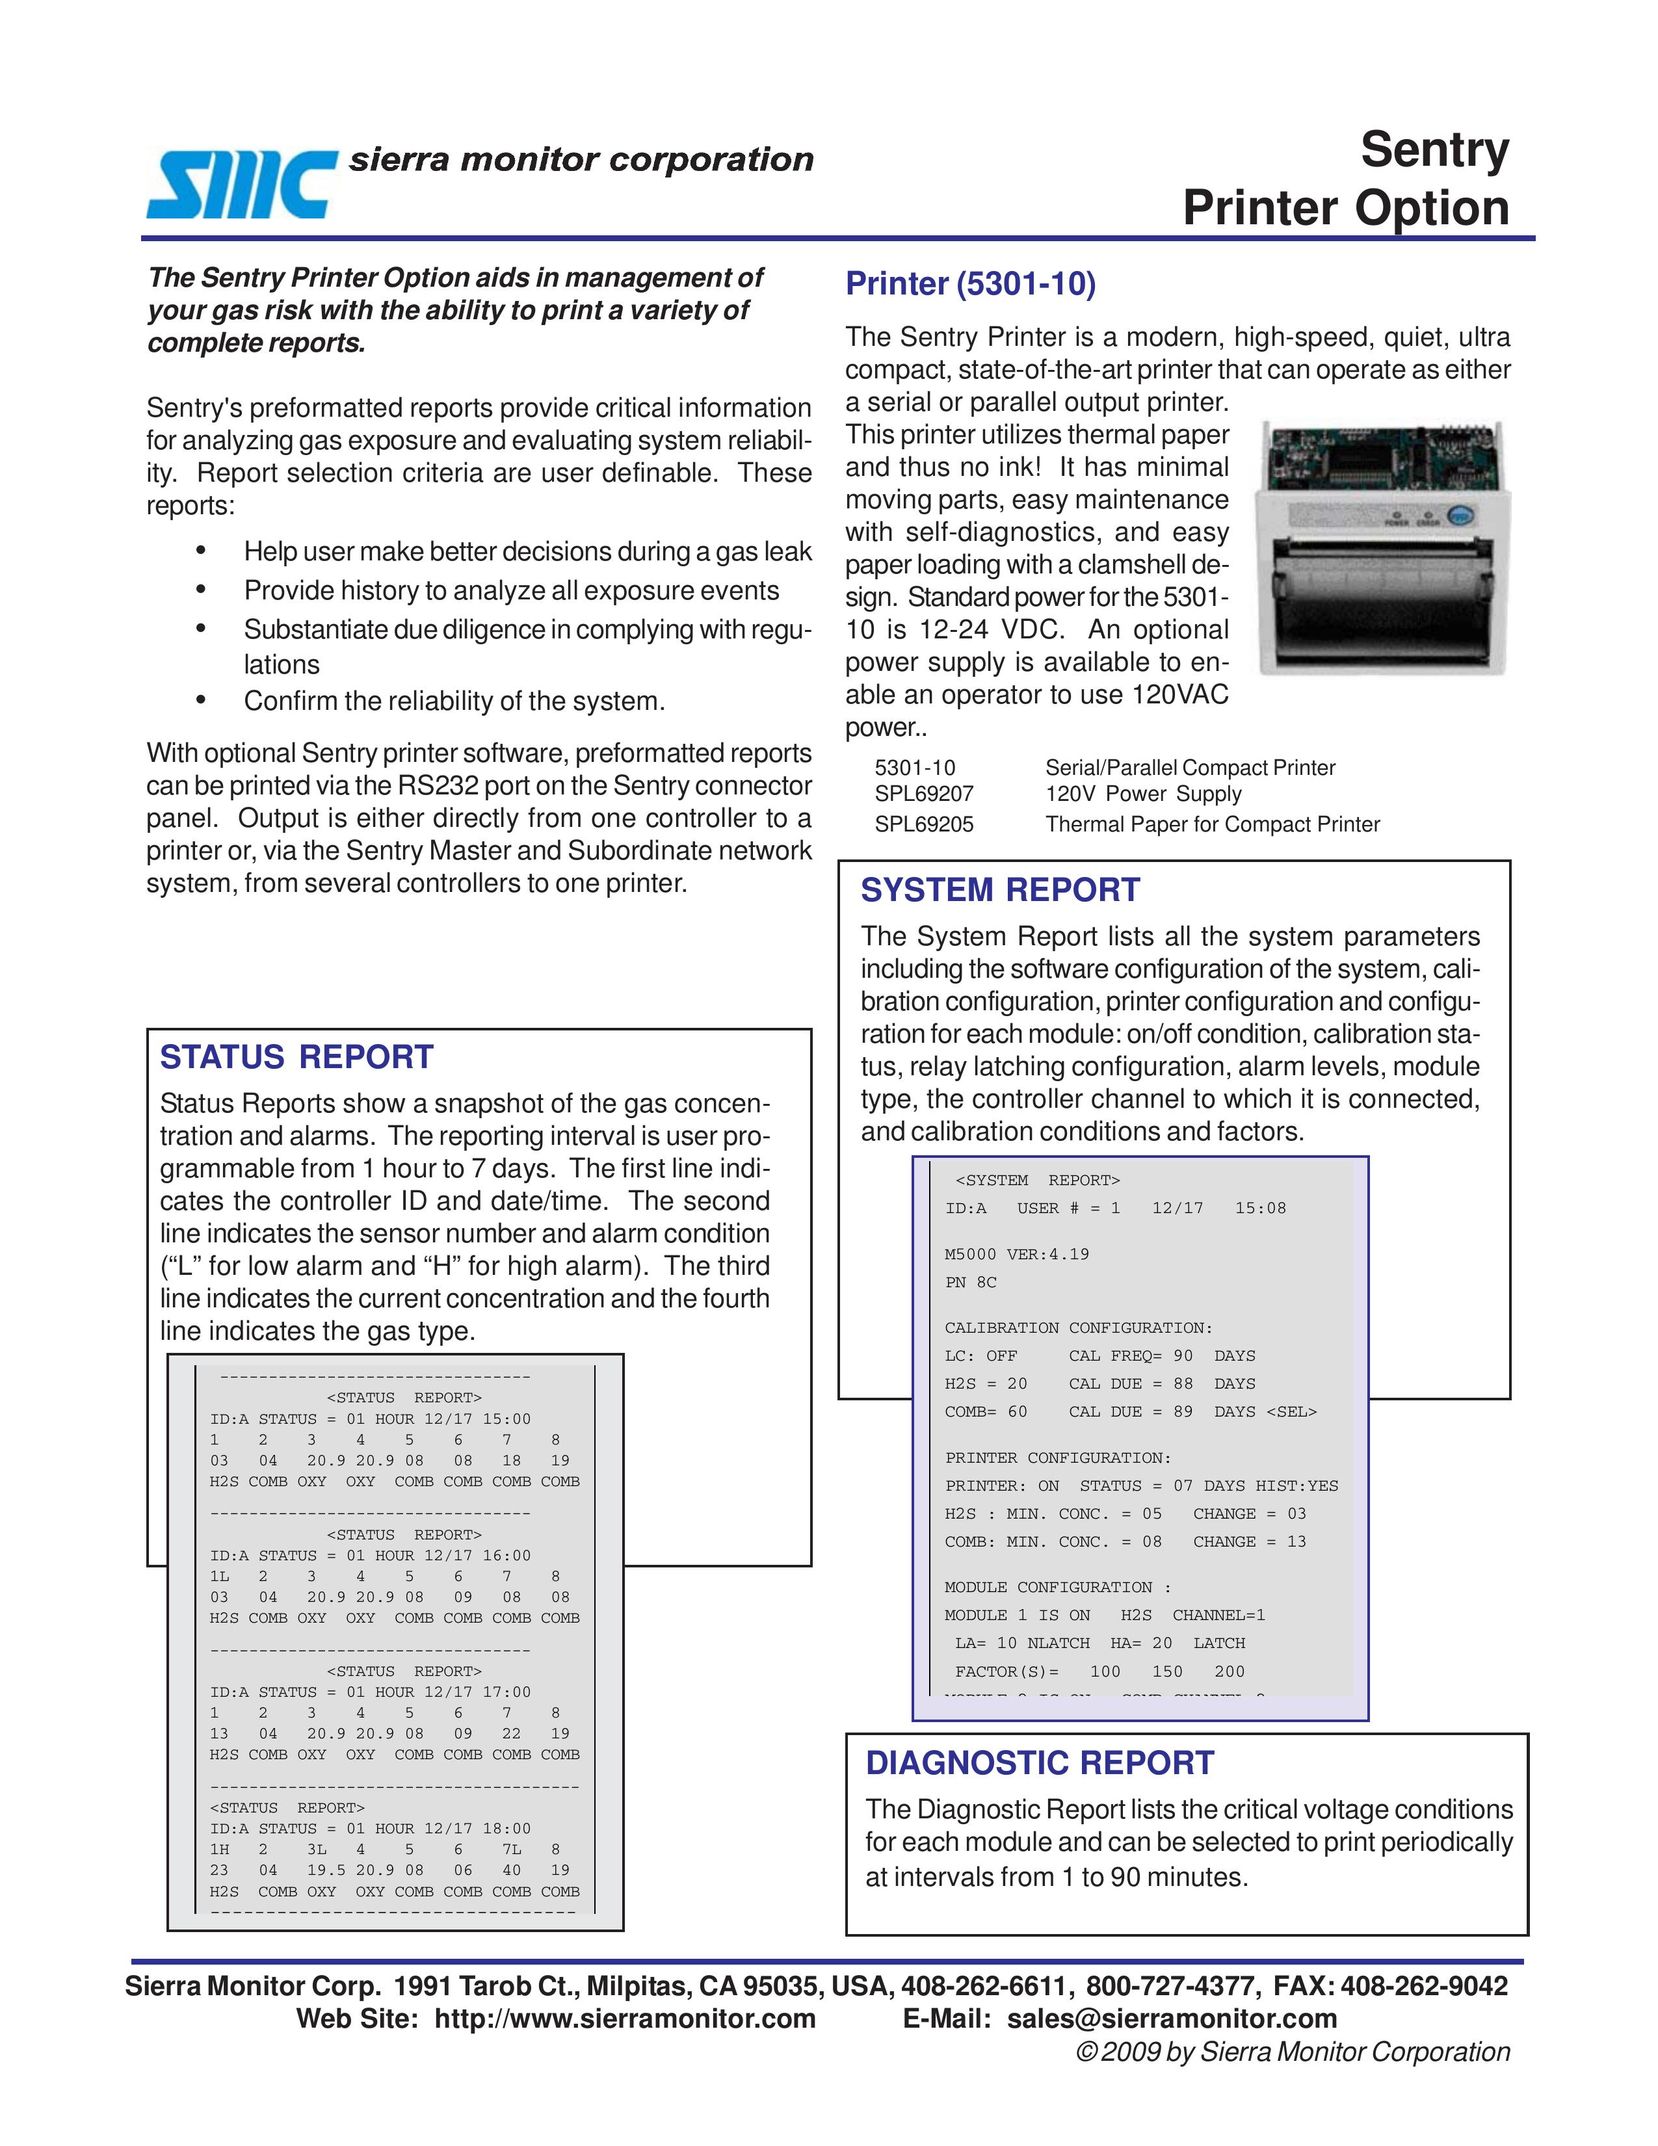 Sierra Monitor Corporation 5301-10 Printer User Manual